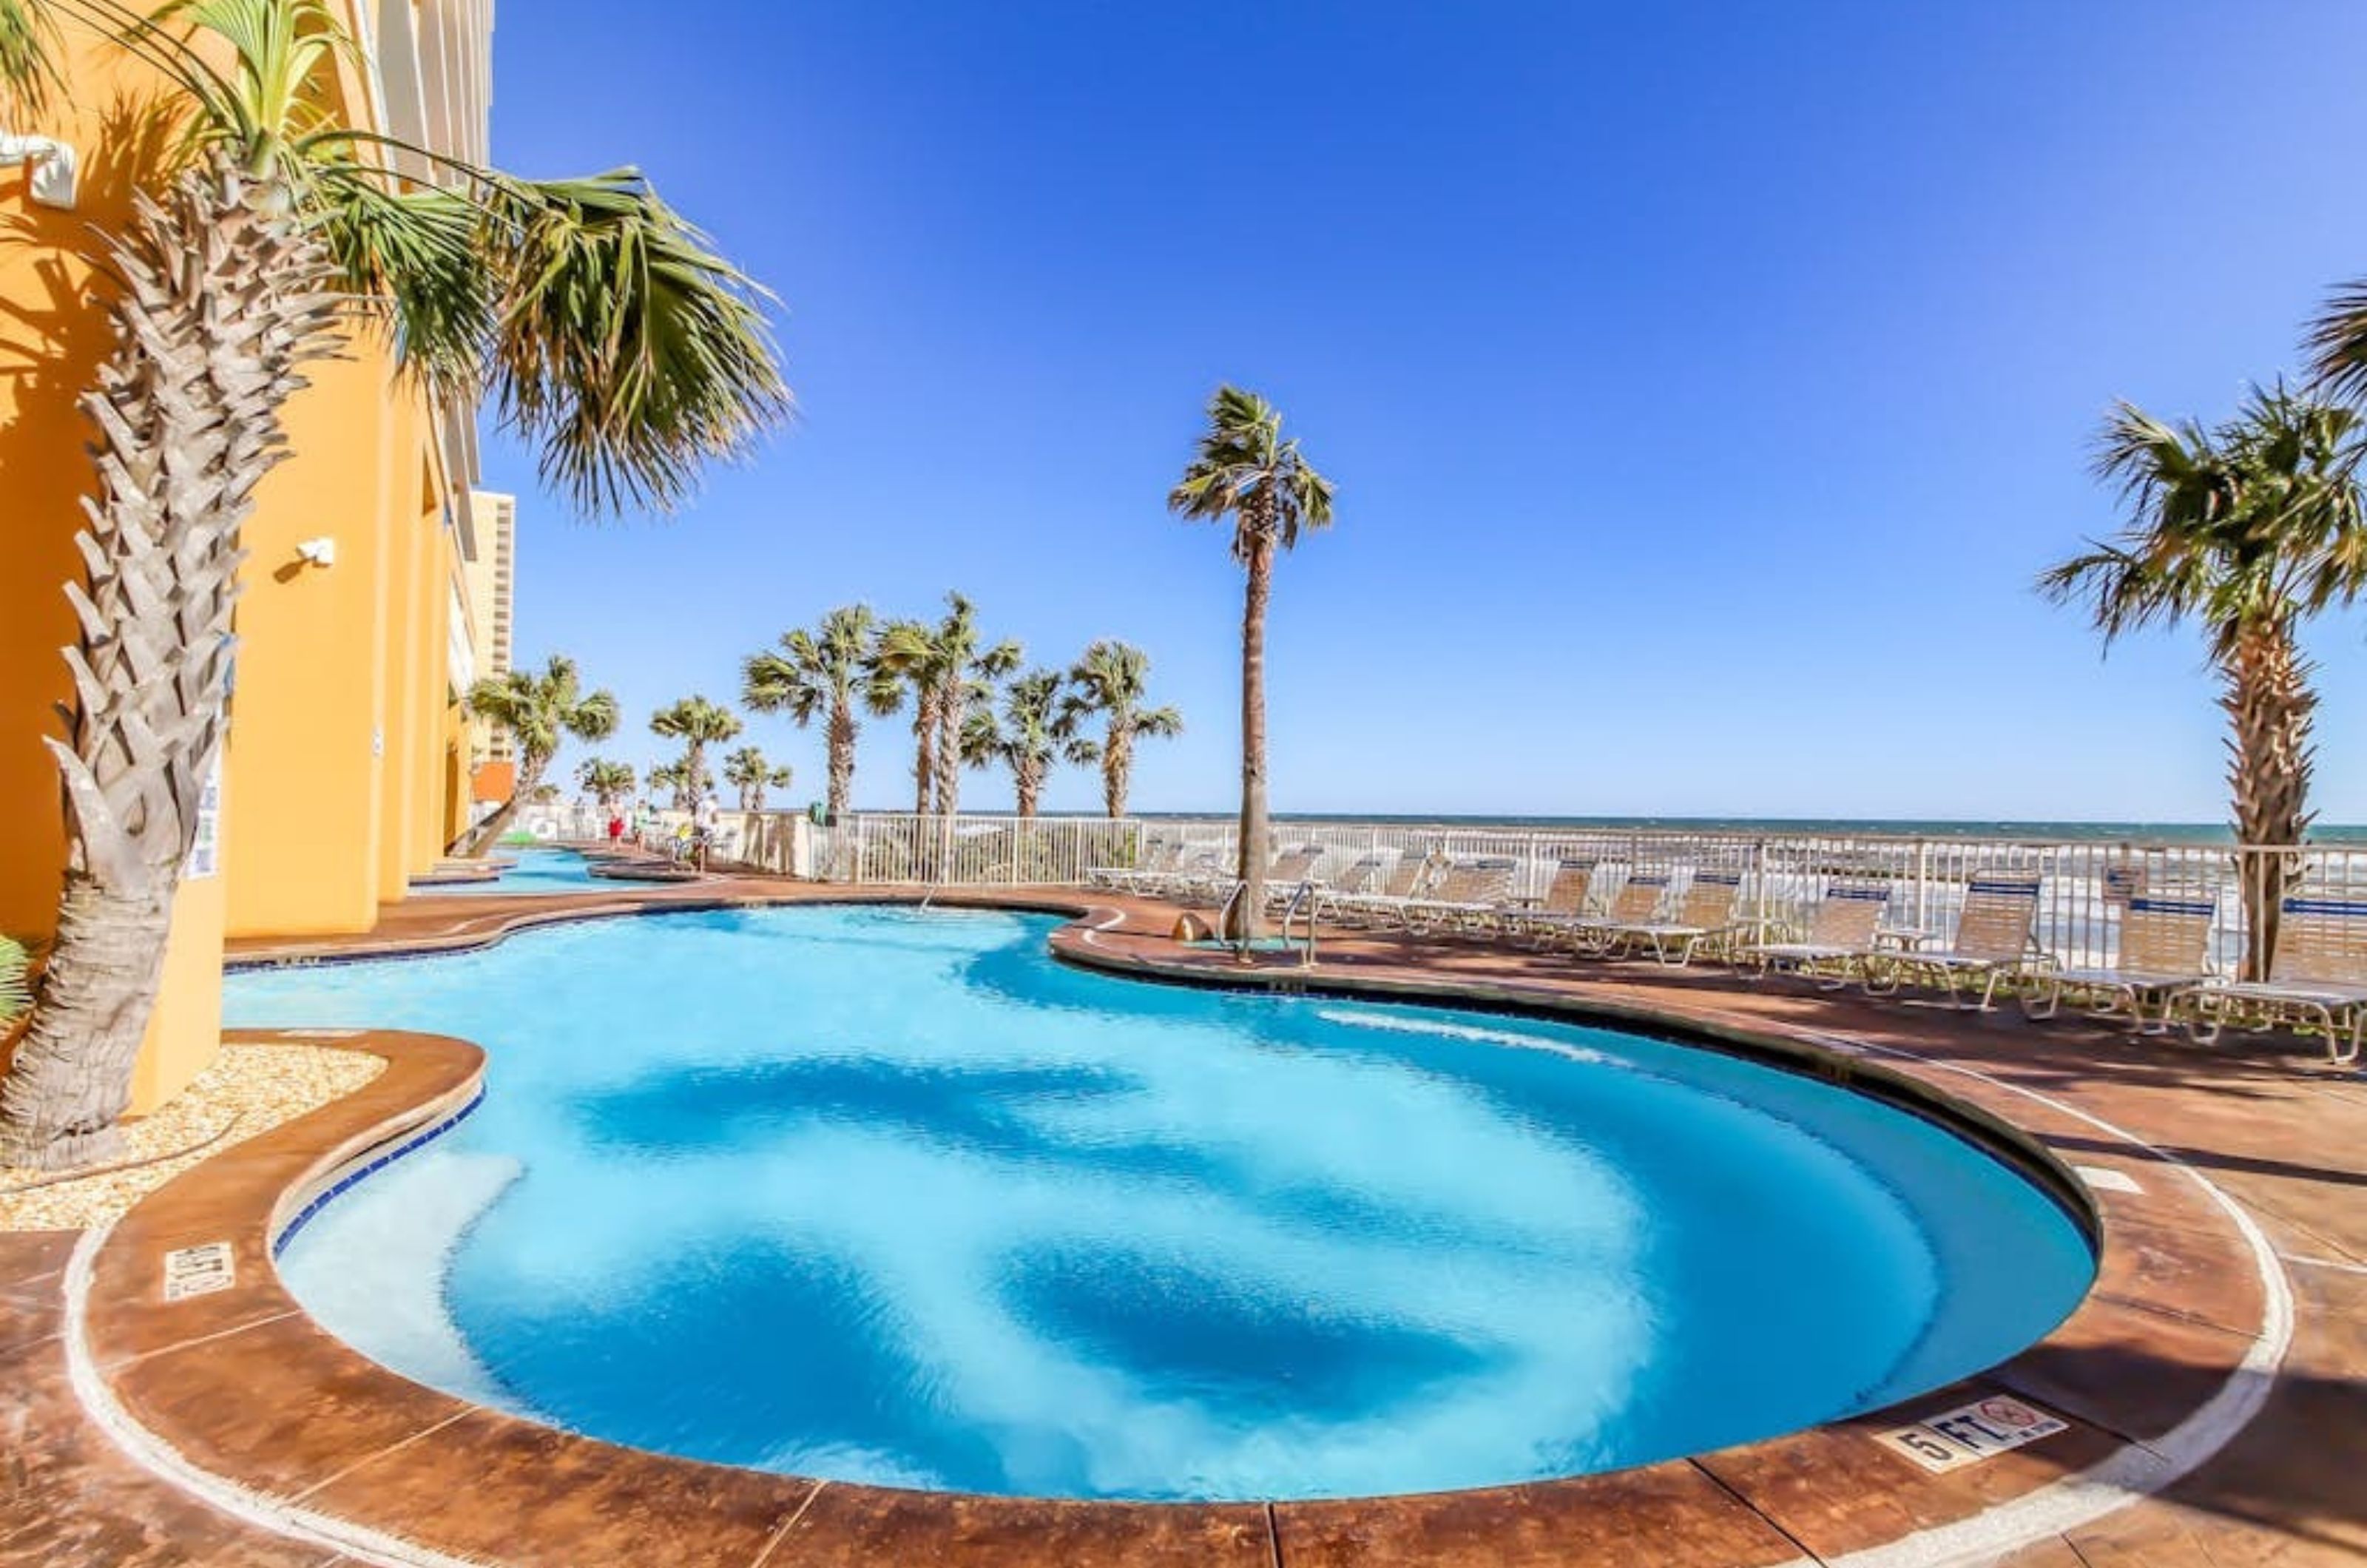 The beachside outdoor pool in front of Splash Resort in Panama City Beach Florida 